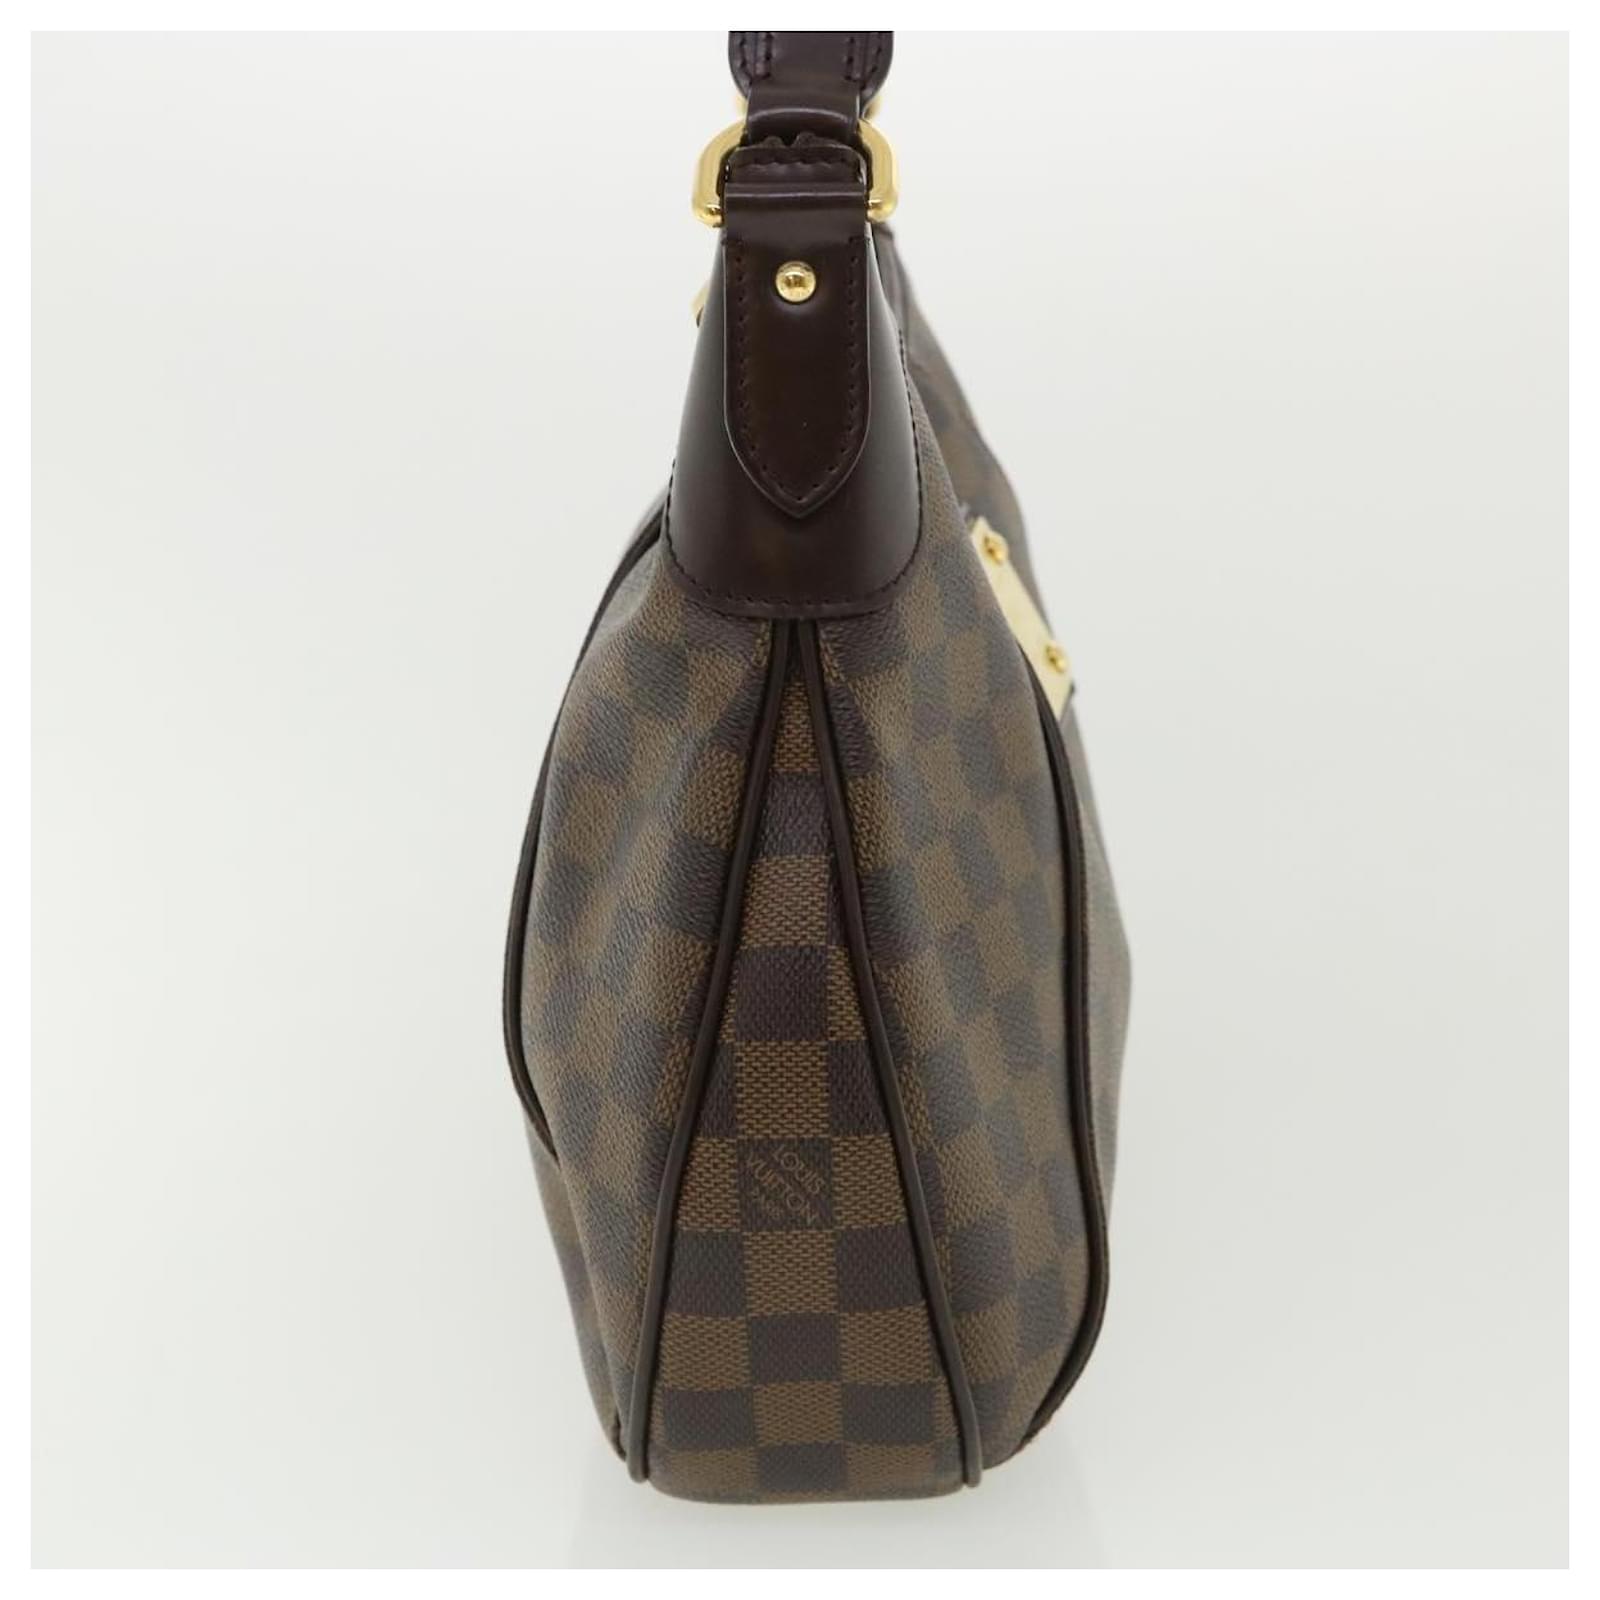 Pre-Owned Louis Vuitton Thames Damier Ebene GM Shoulder Bag - Very